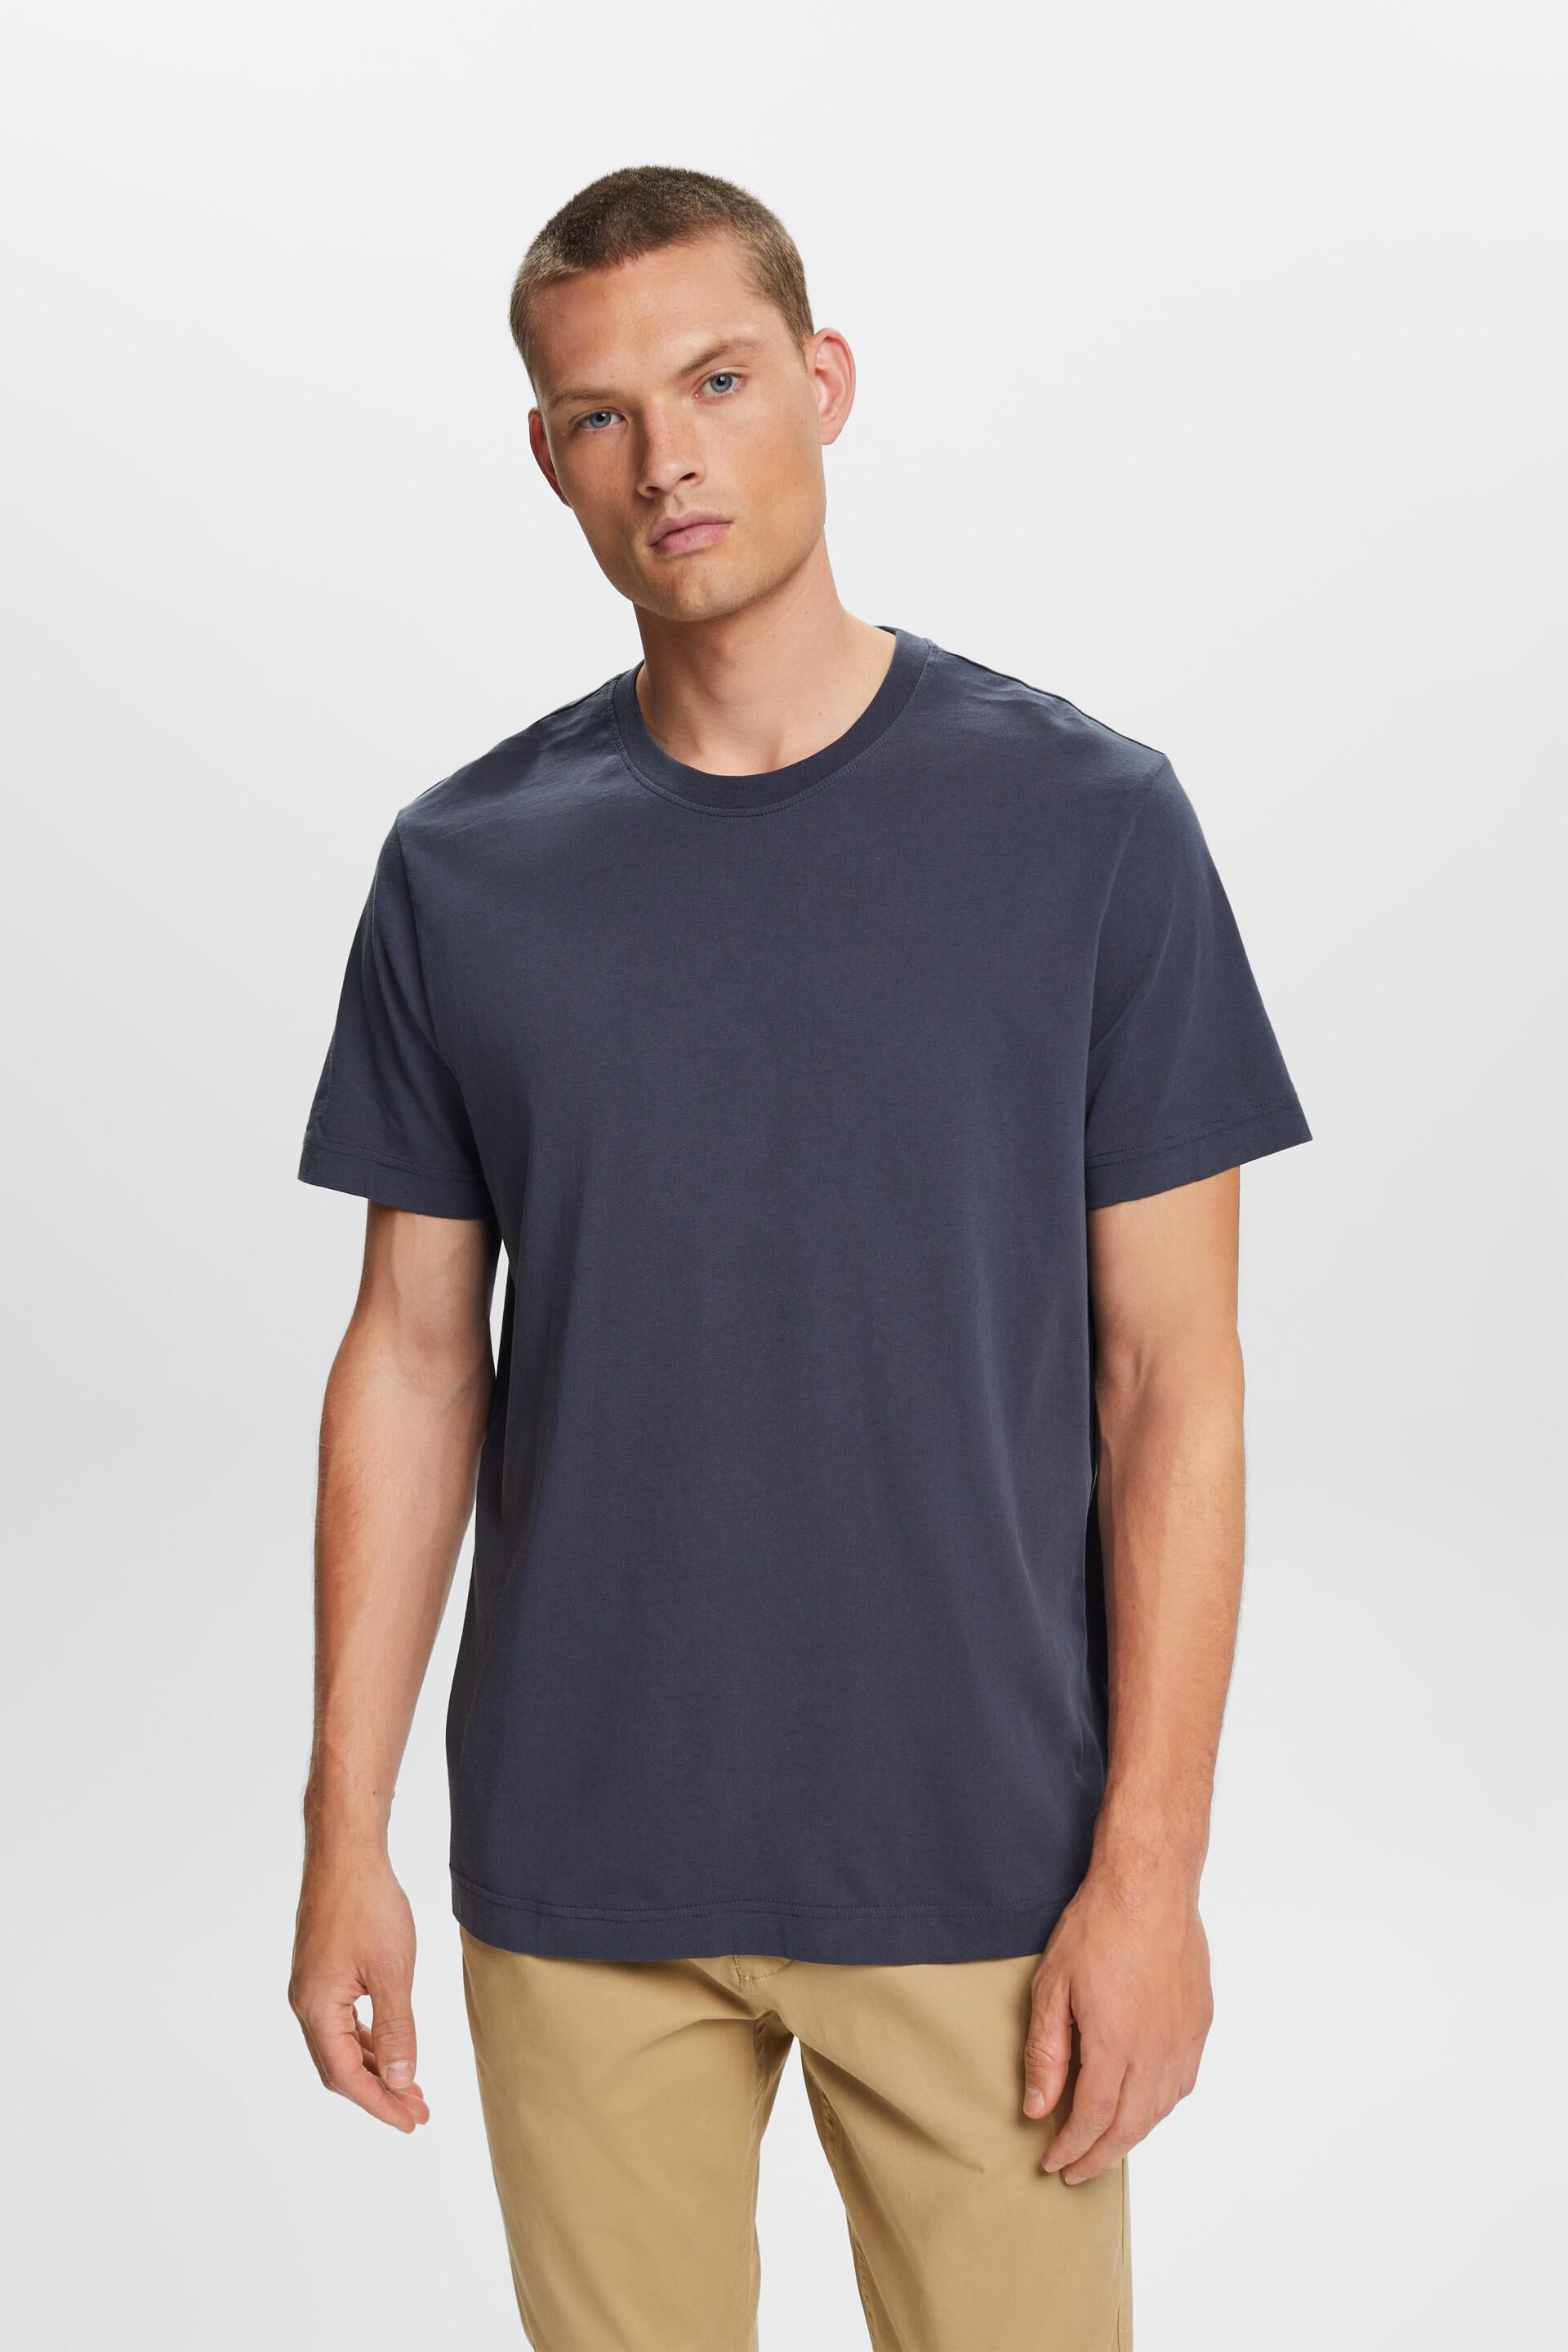 Esprit Jersey cotton t-shirt, 100% crewneck